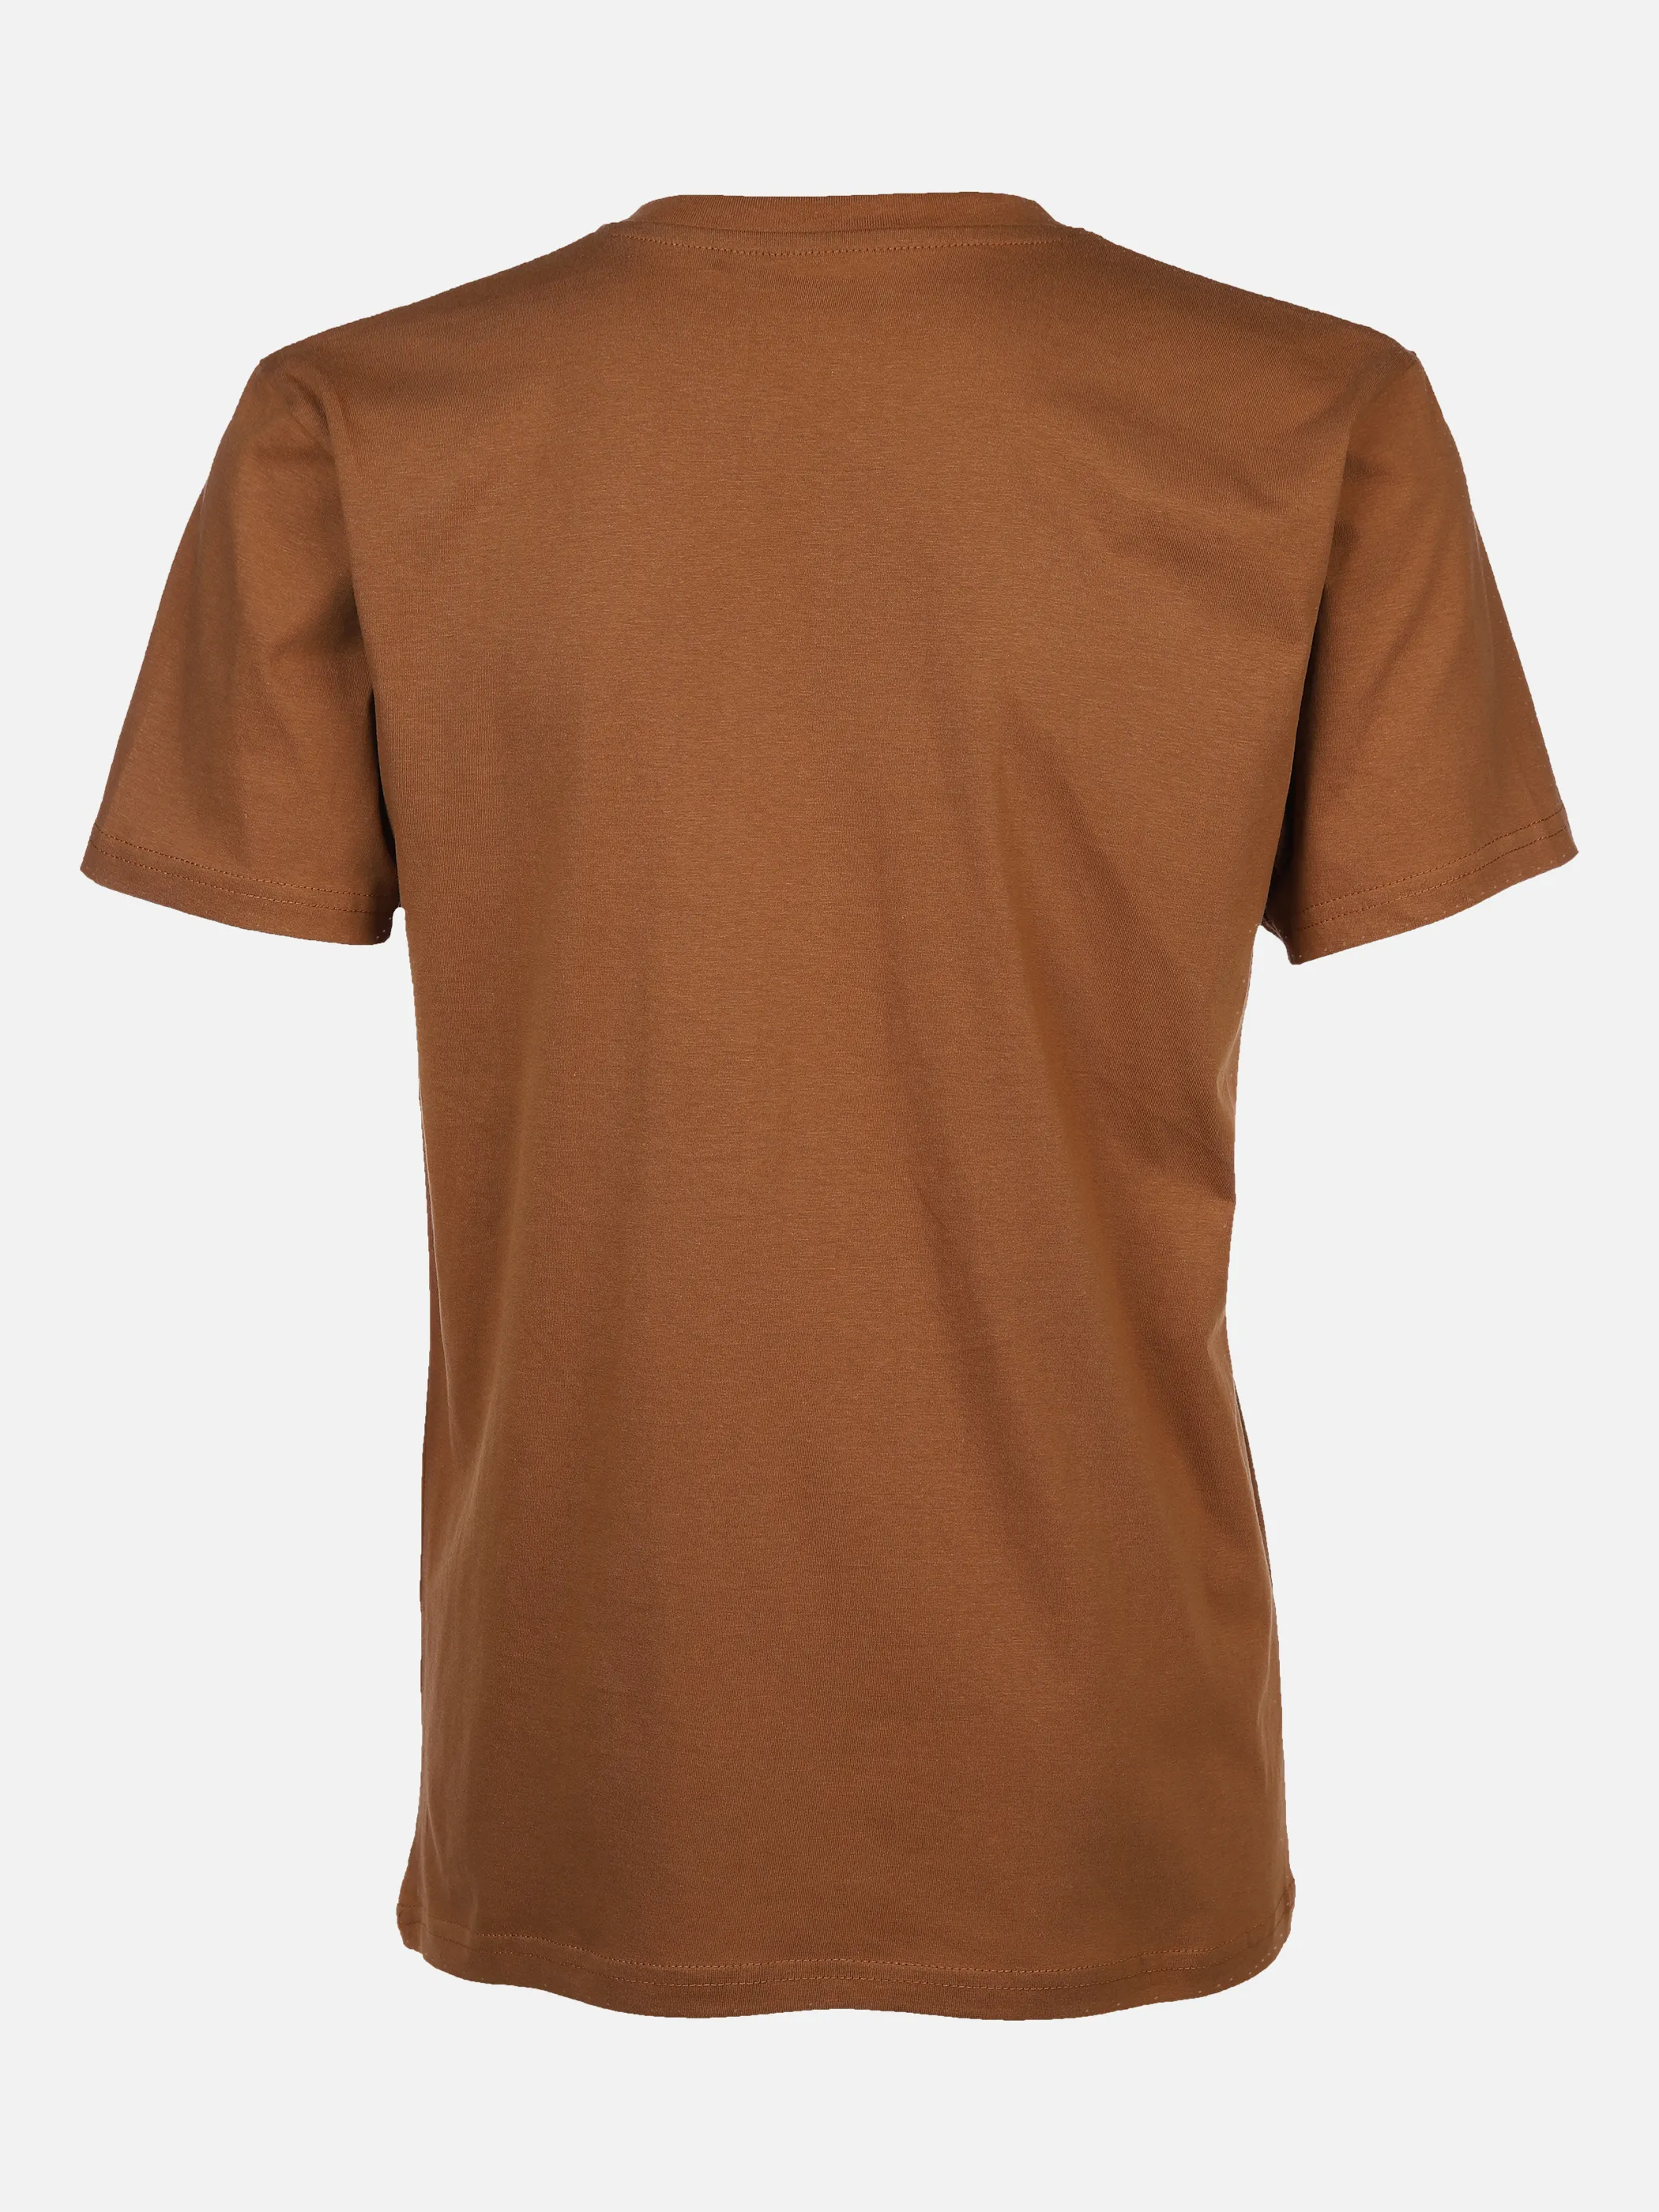 One Way YF-He-T-Shirt, Basic Braun 869559 BROWN 2